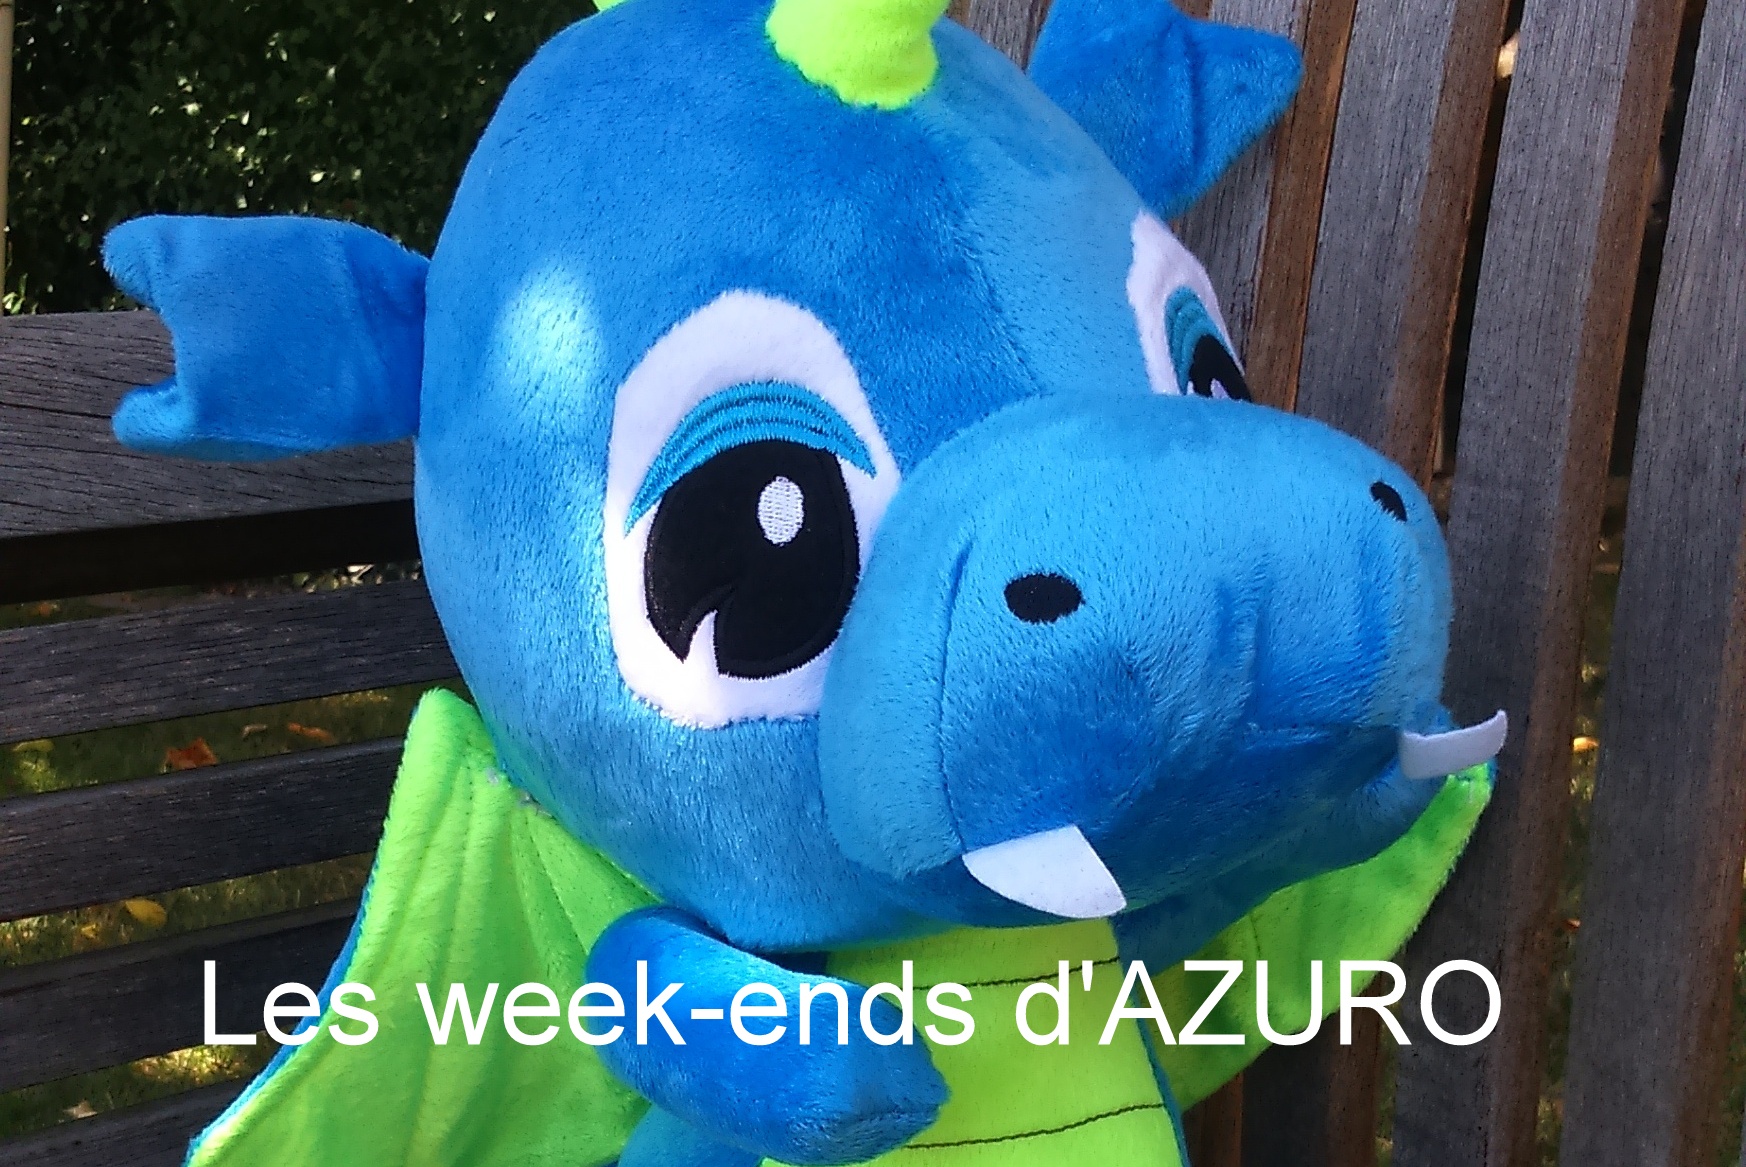 Les week-ends d’Azuro